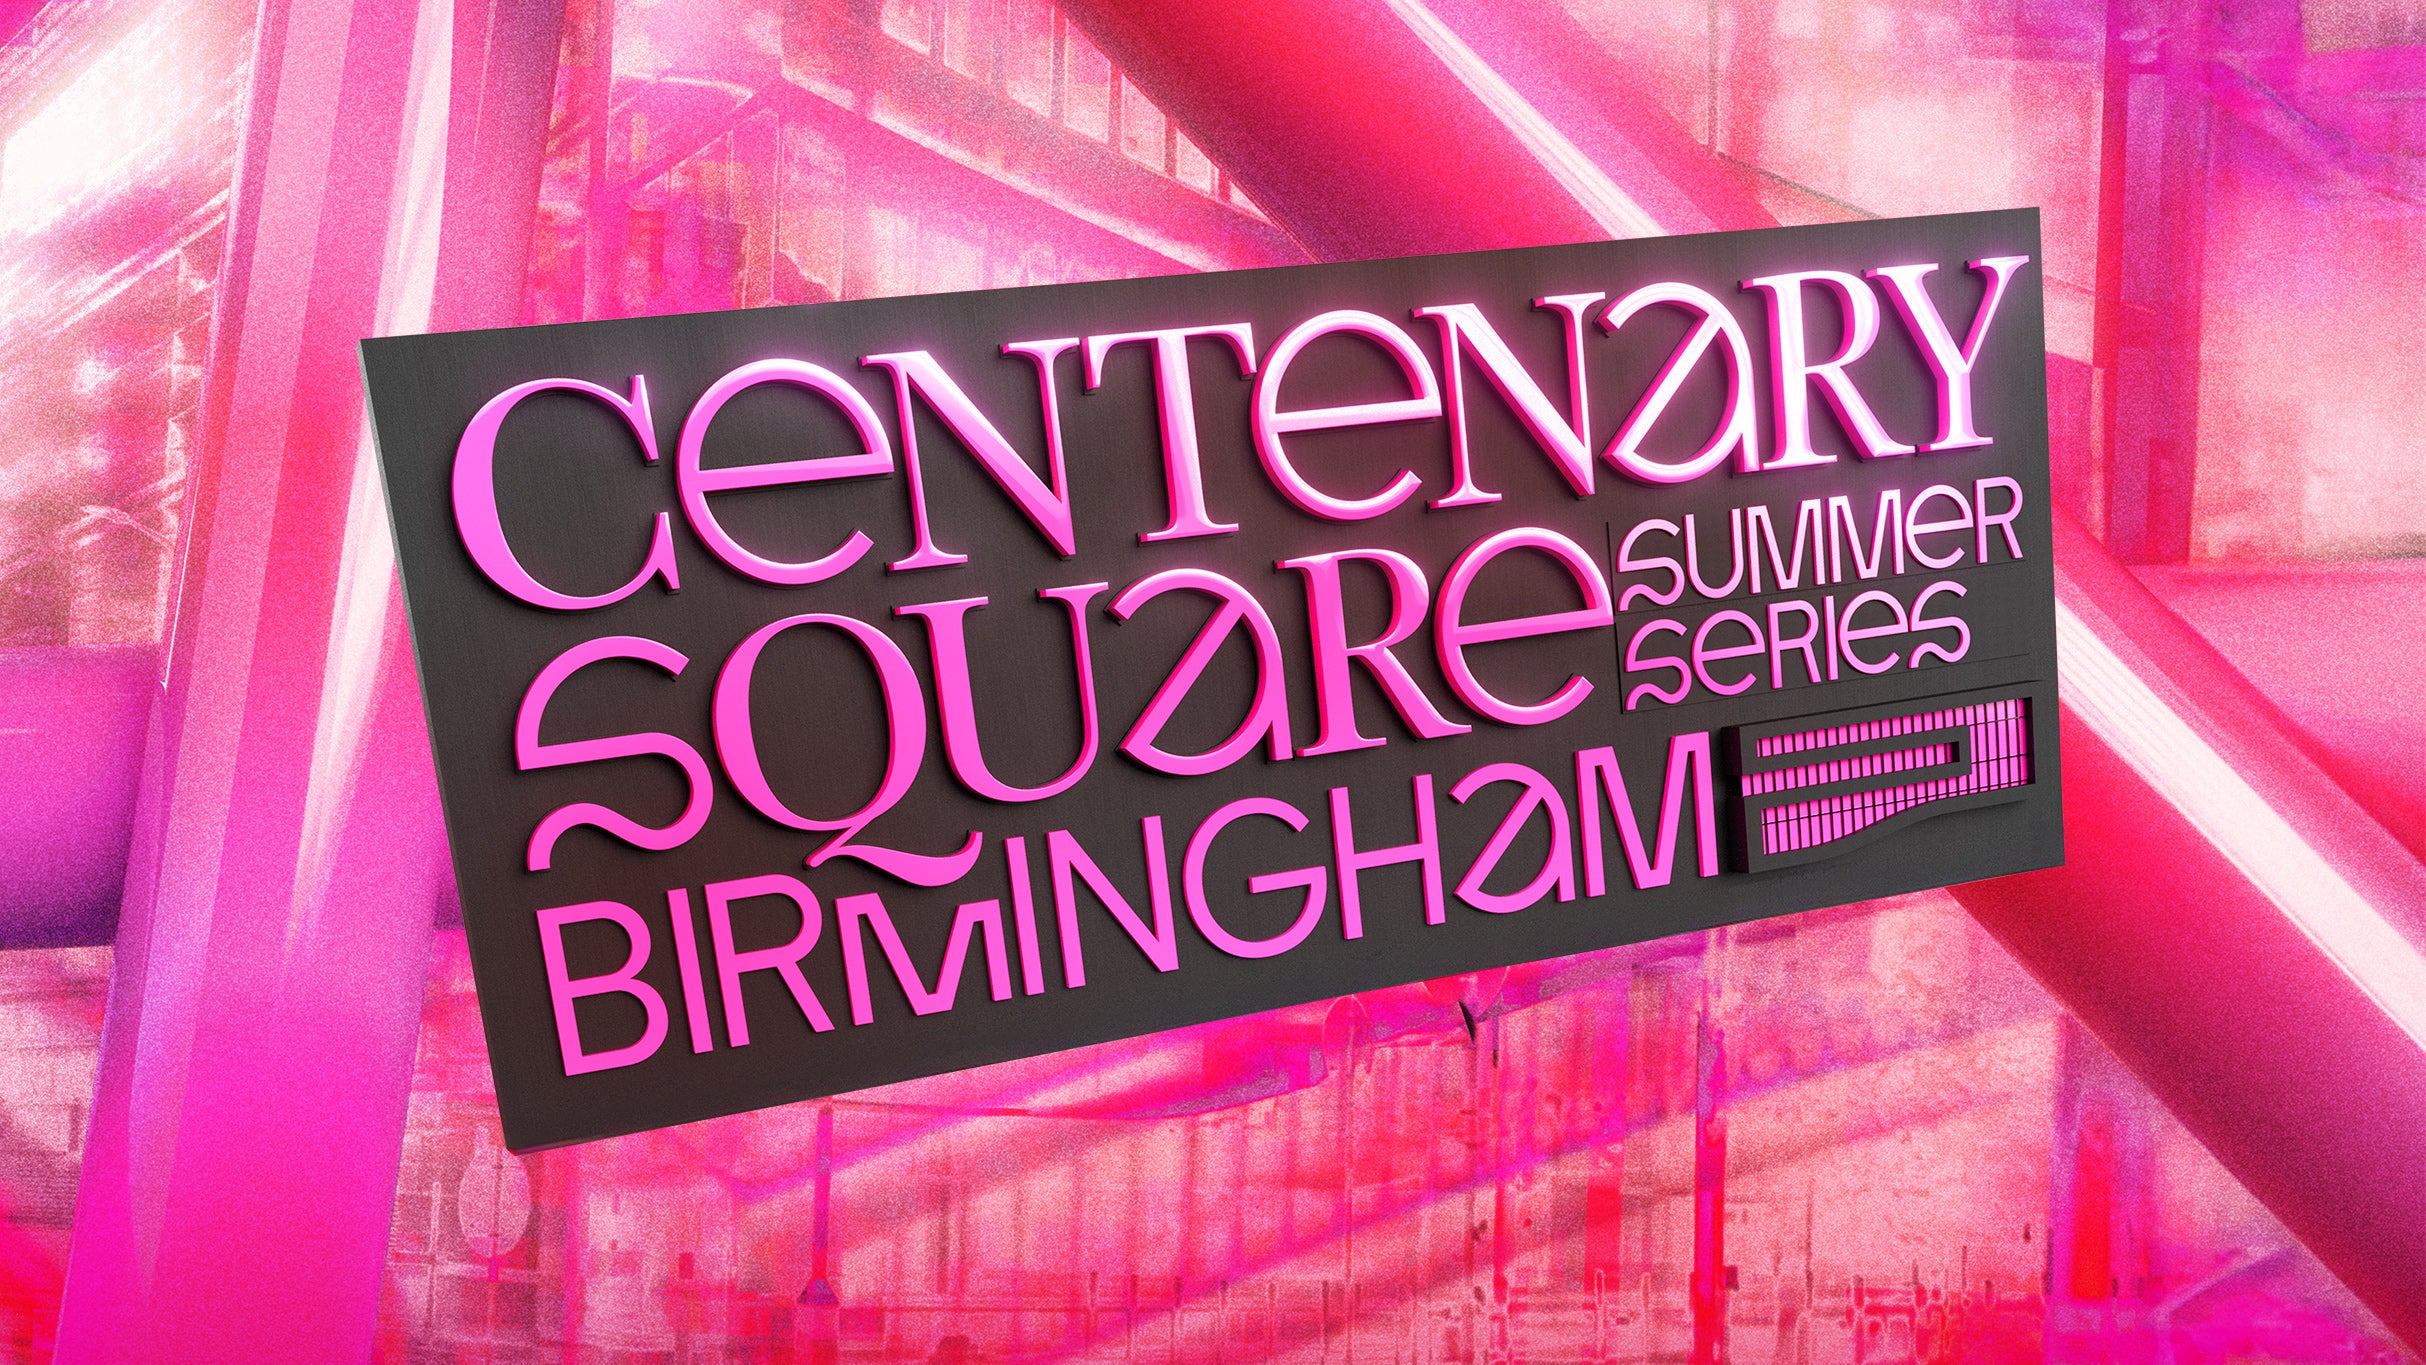 Centenary Square Summer Series: Cian Ducrot pre-sale code for show tickets in Birmingham,  (Centenary Square, Birmingham)